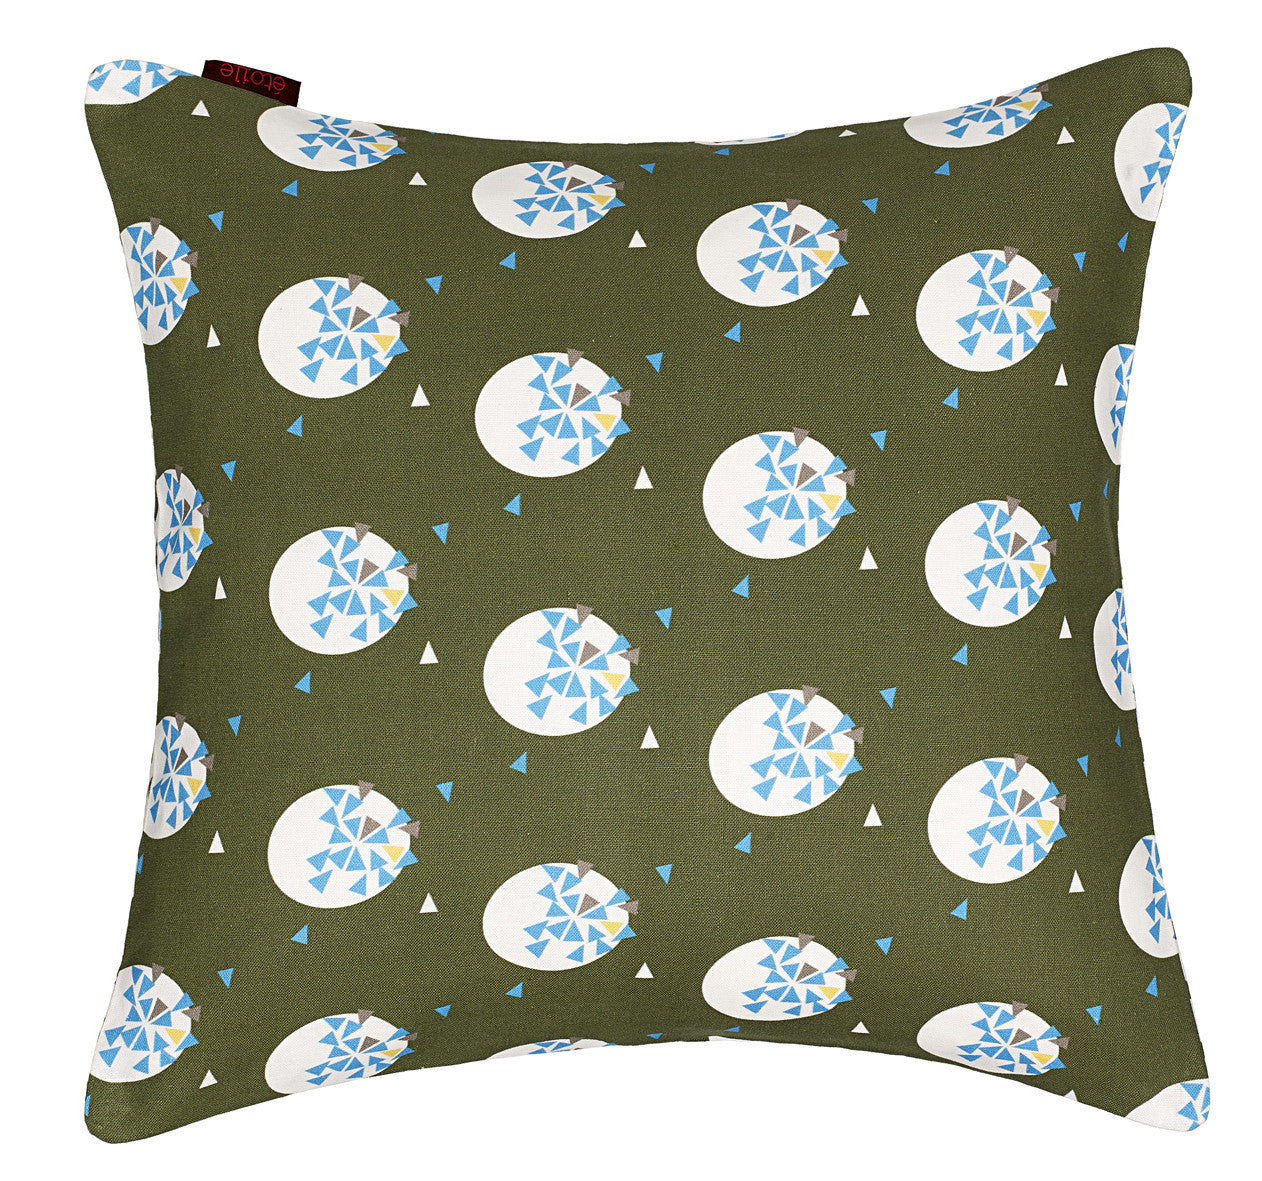 Ceramic Geometric Pattern Cotton Linen Throw Pillow on Olive Green 45x45cm (18x18") canada USA